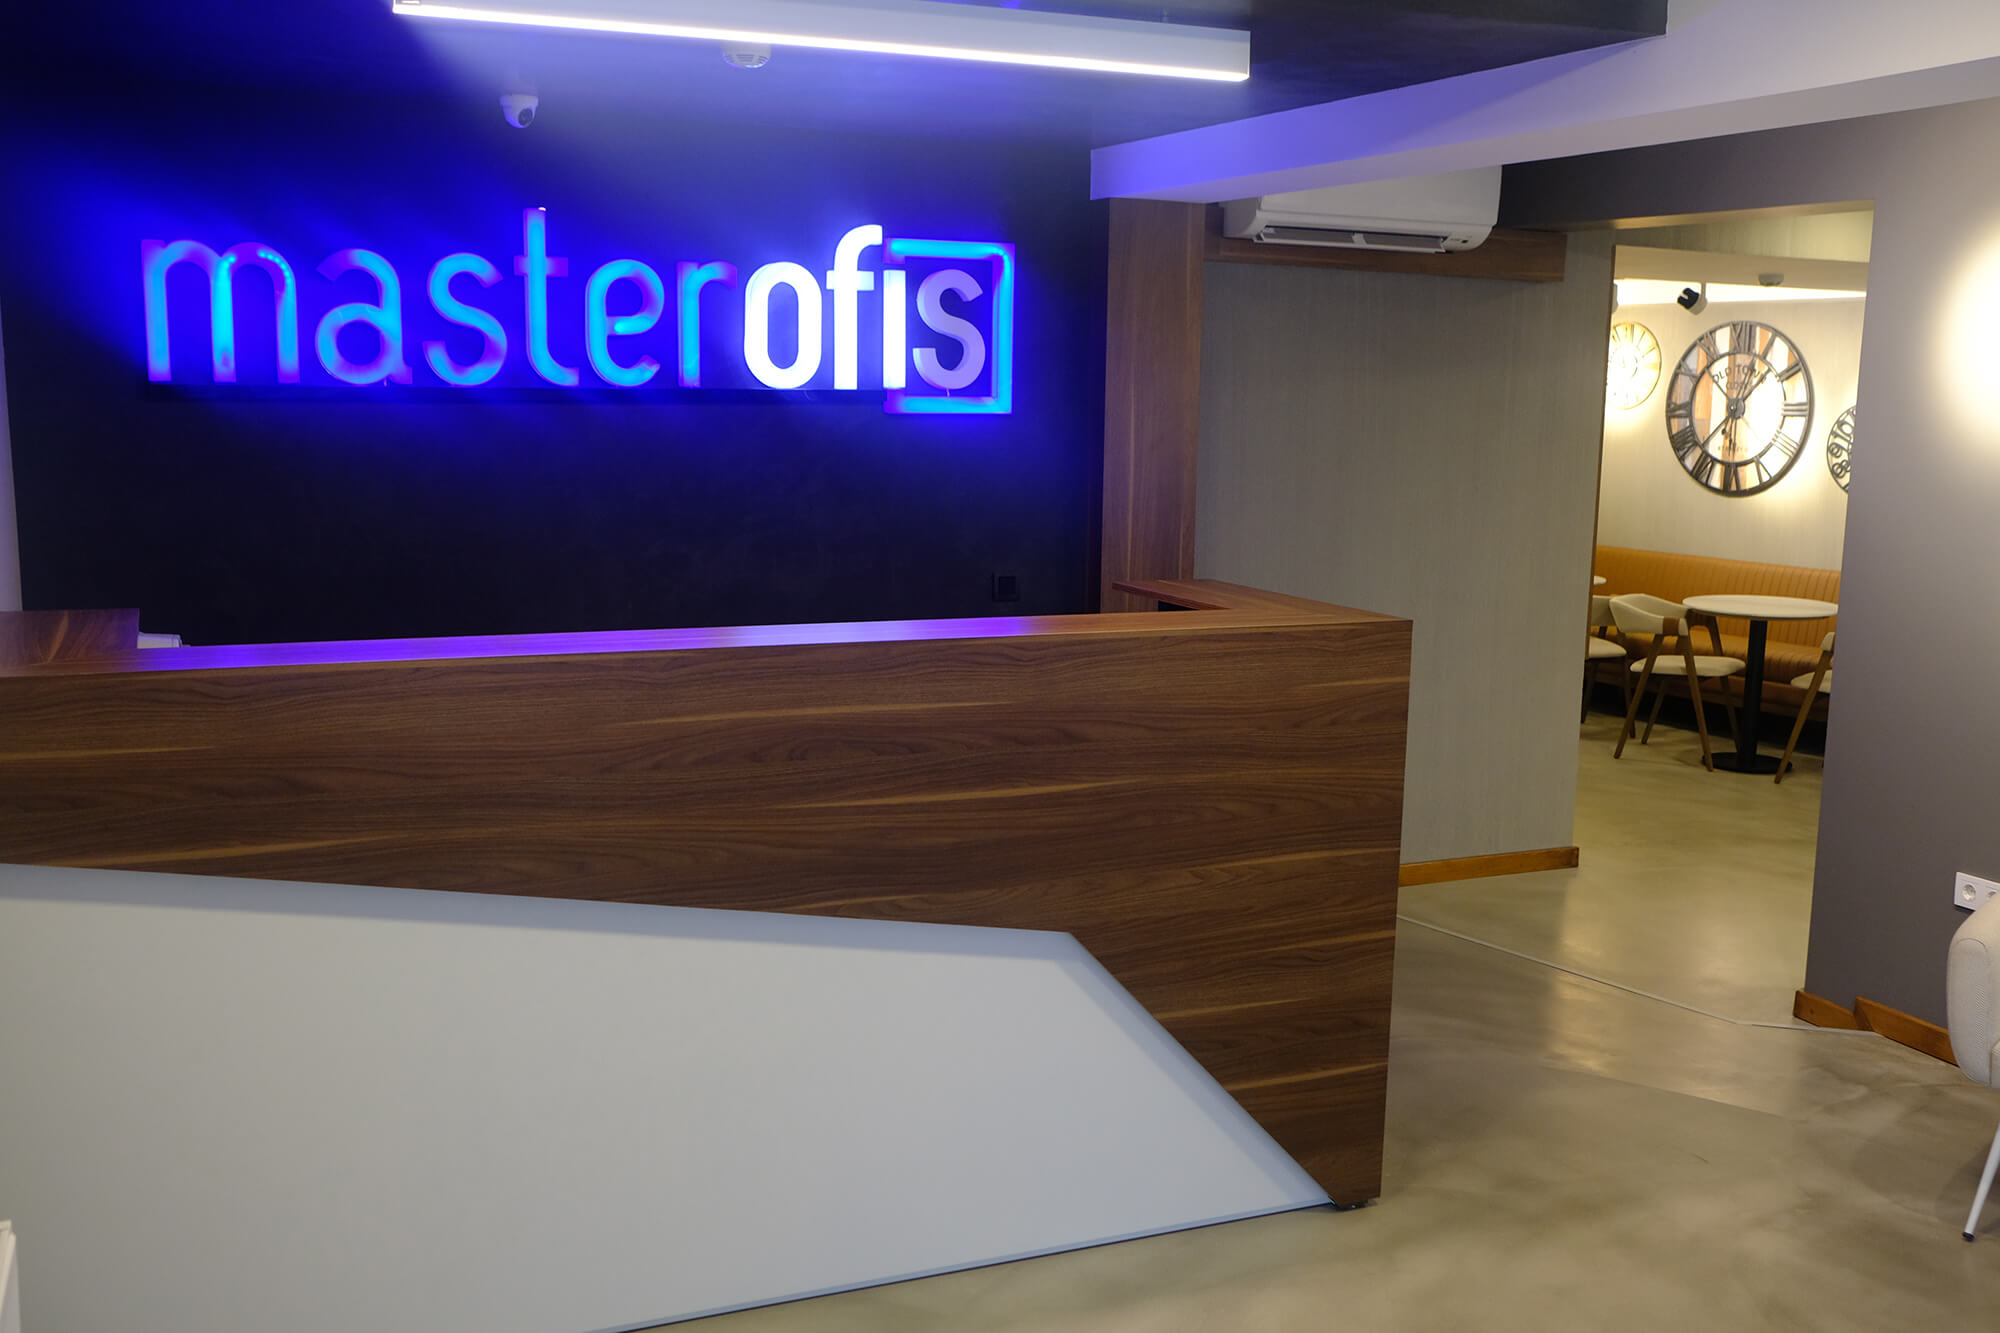 Master ofis Ataşehir şubesi 